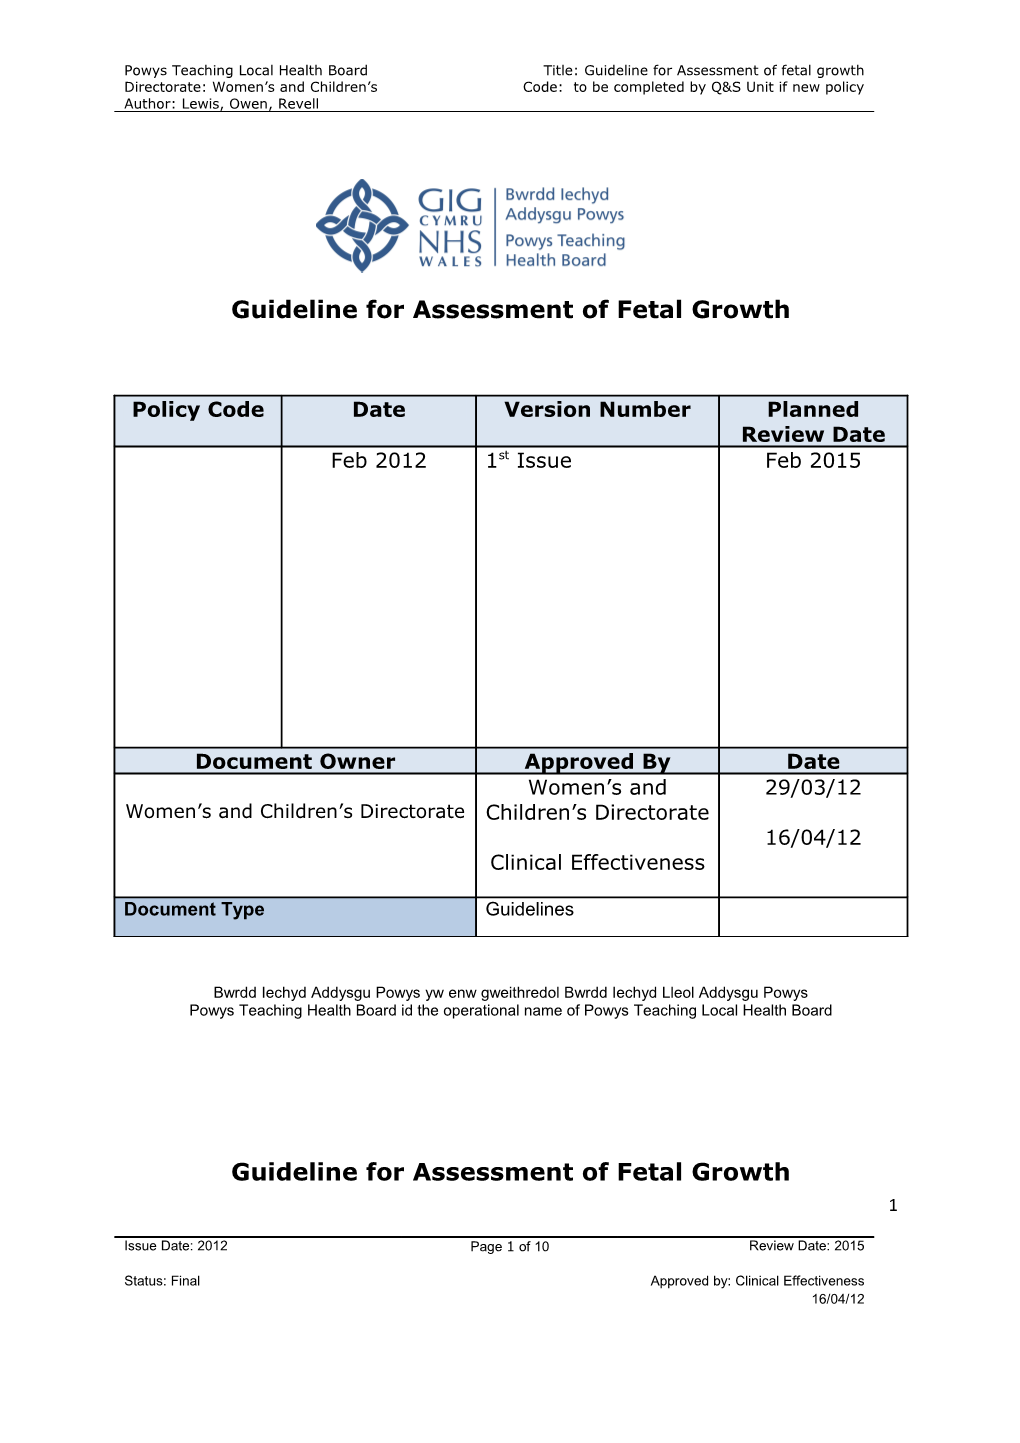 Guideline for Assessment of Fetal Growth